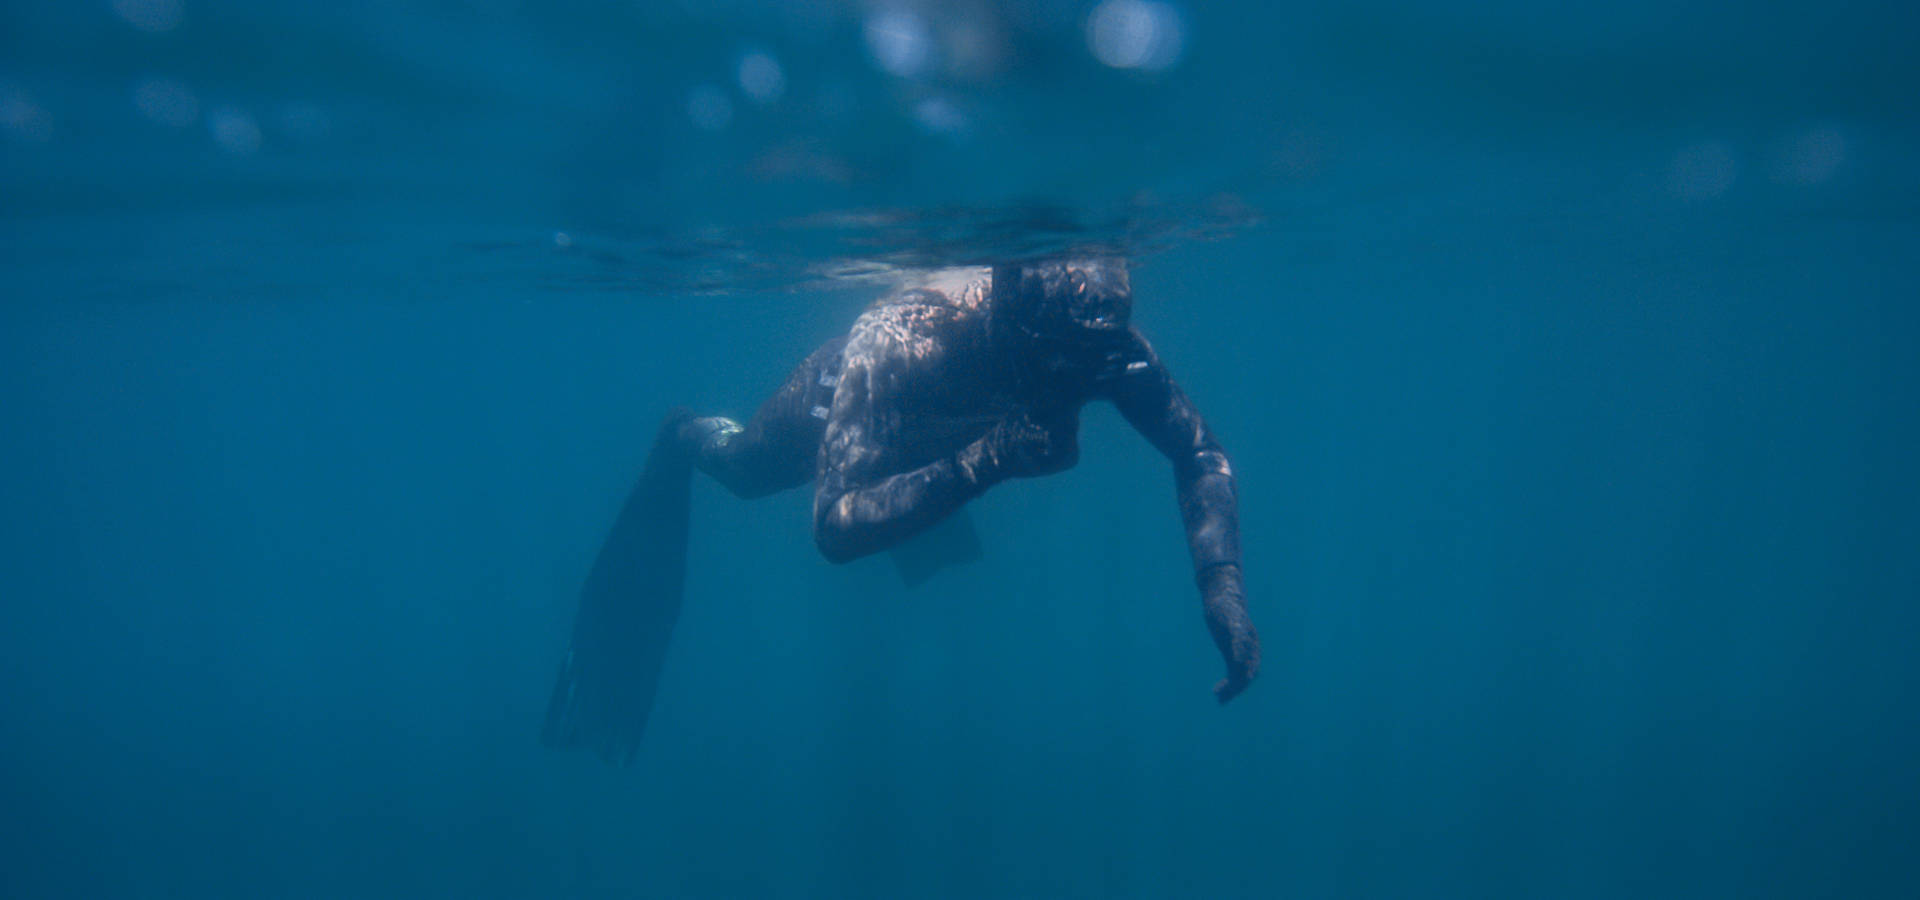 Snorkeling In The Deep Blue Ocean Wallpaper